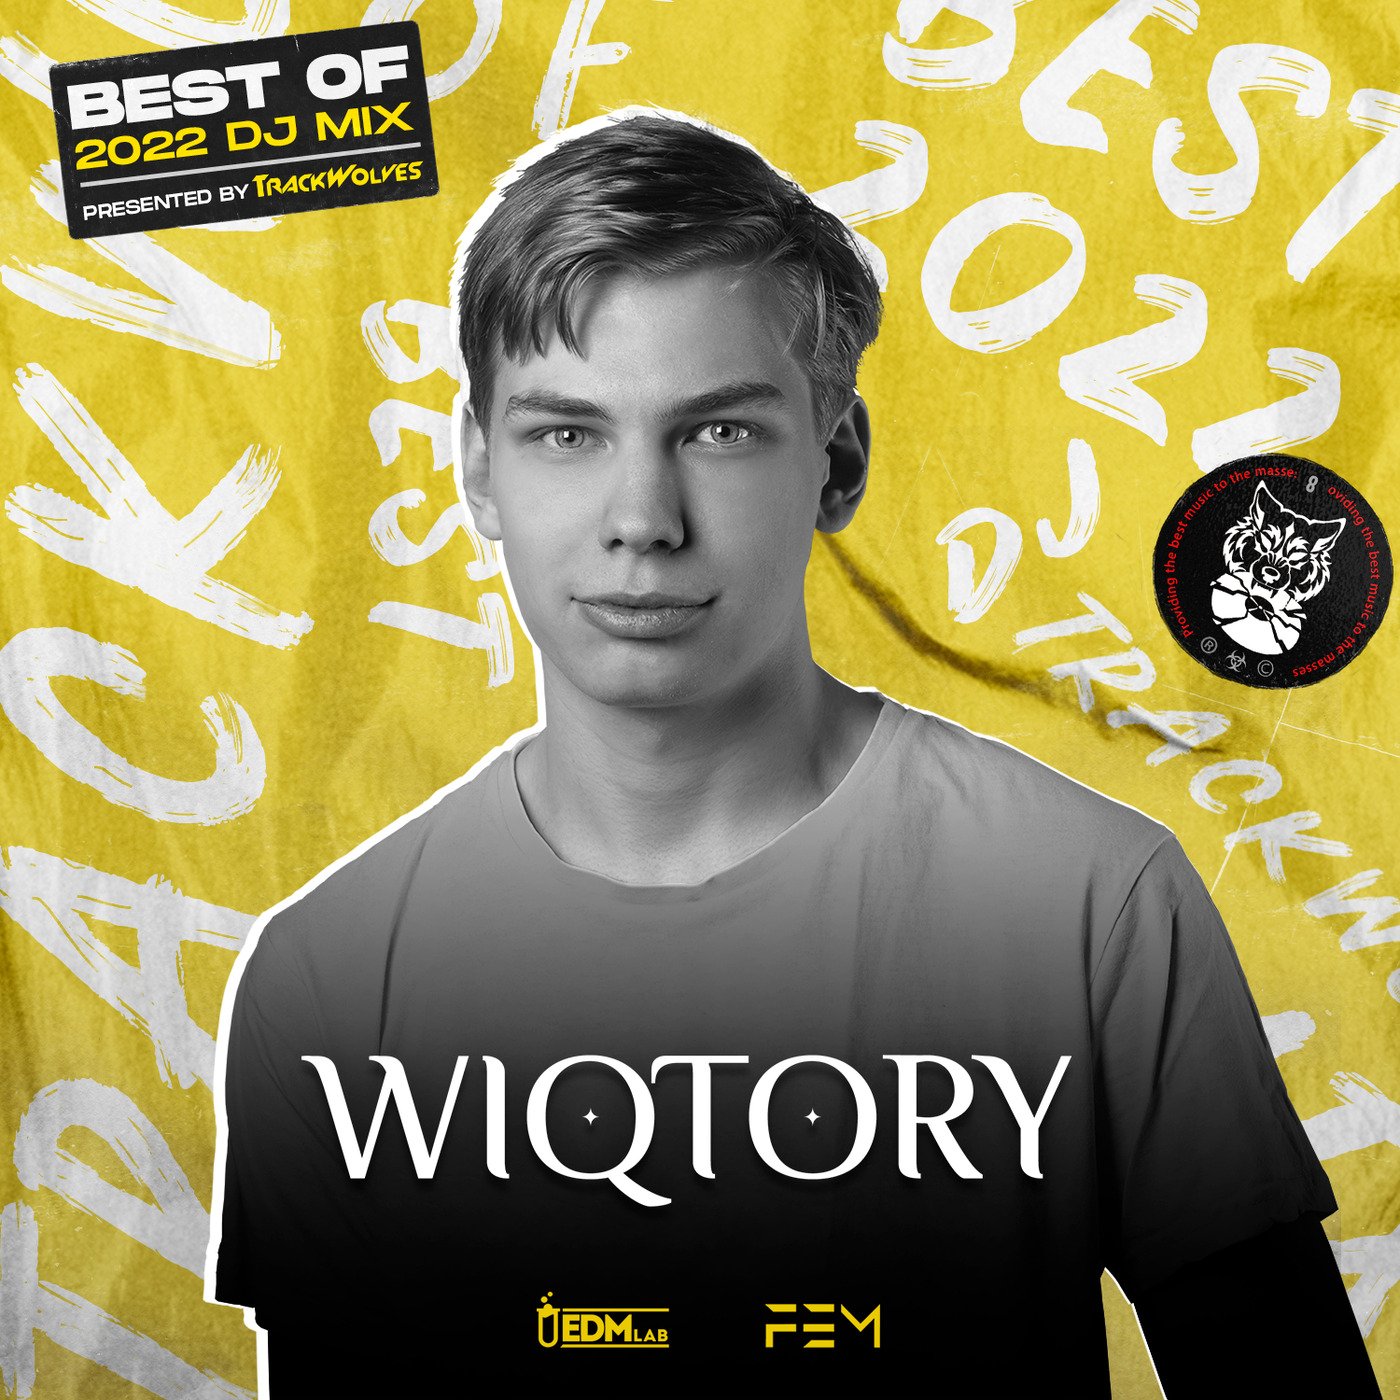 Wiqtory - TrackWolves Best Of 2022 DJ Mix